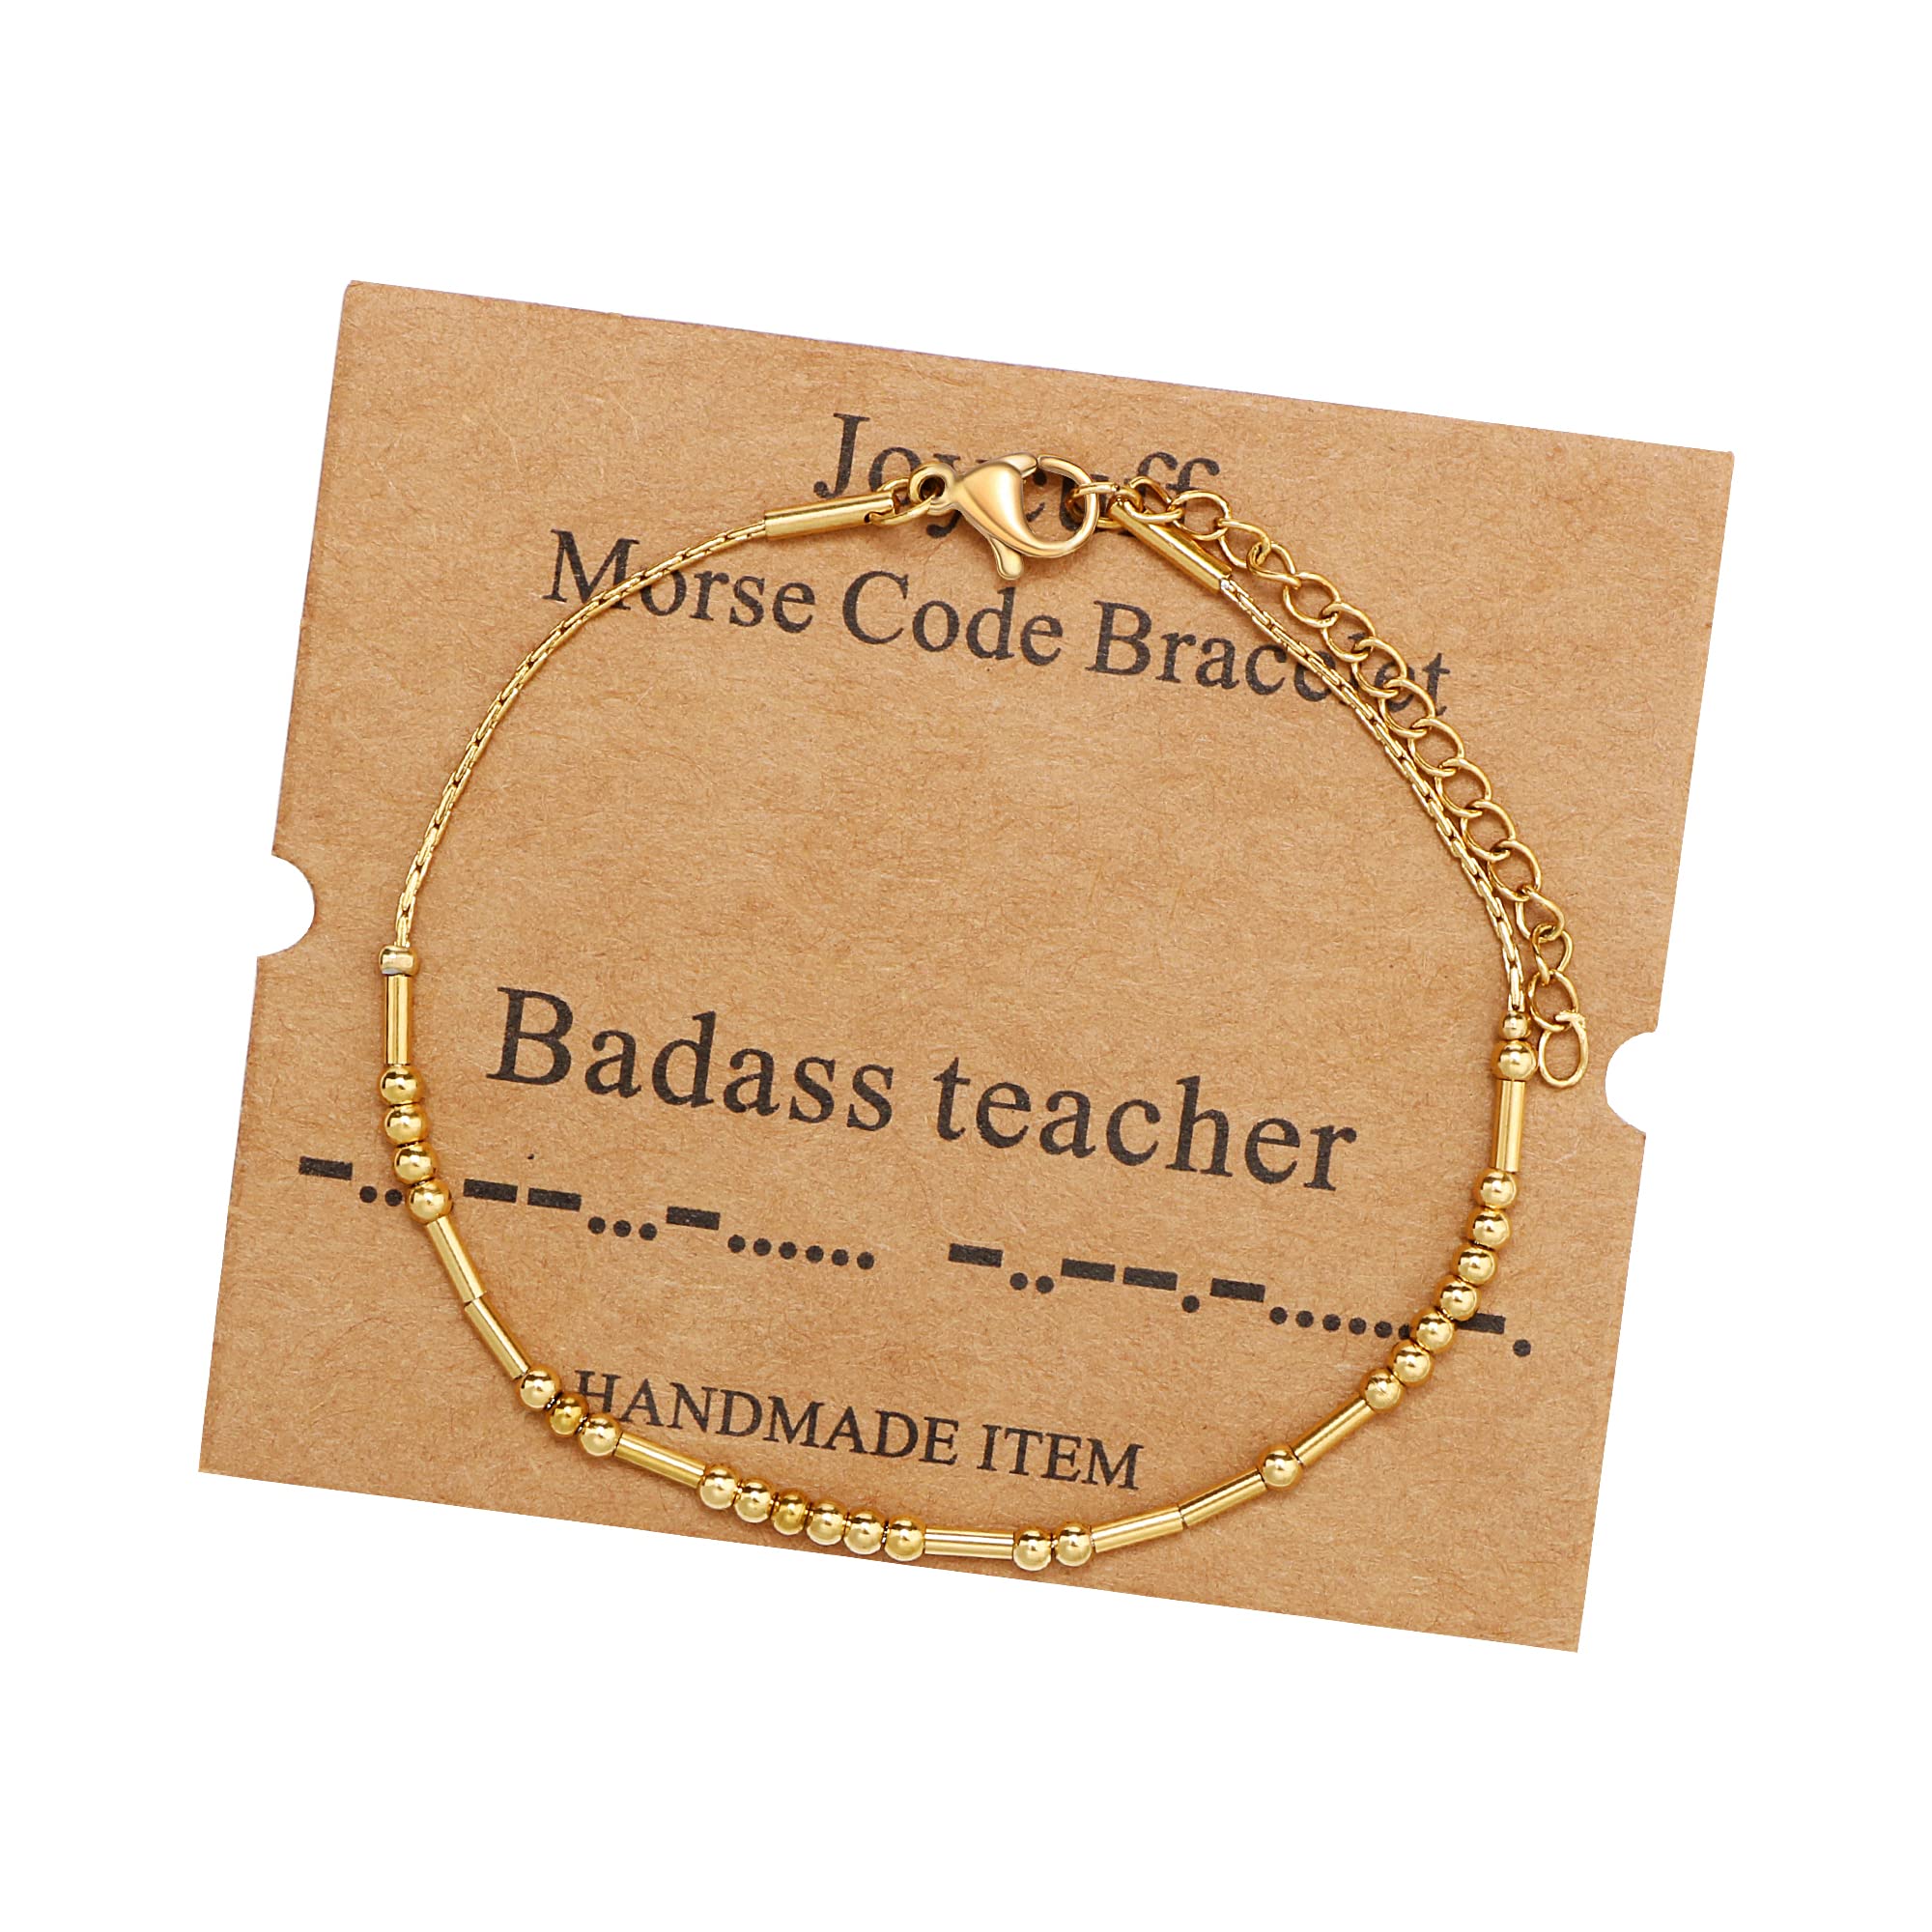 JoycuFF Inspirational Morse Code Bracelets for Women